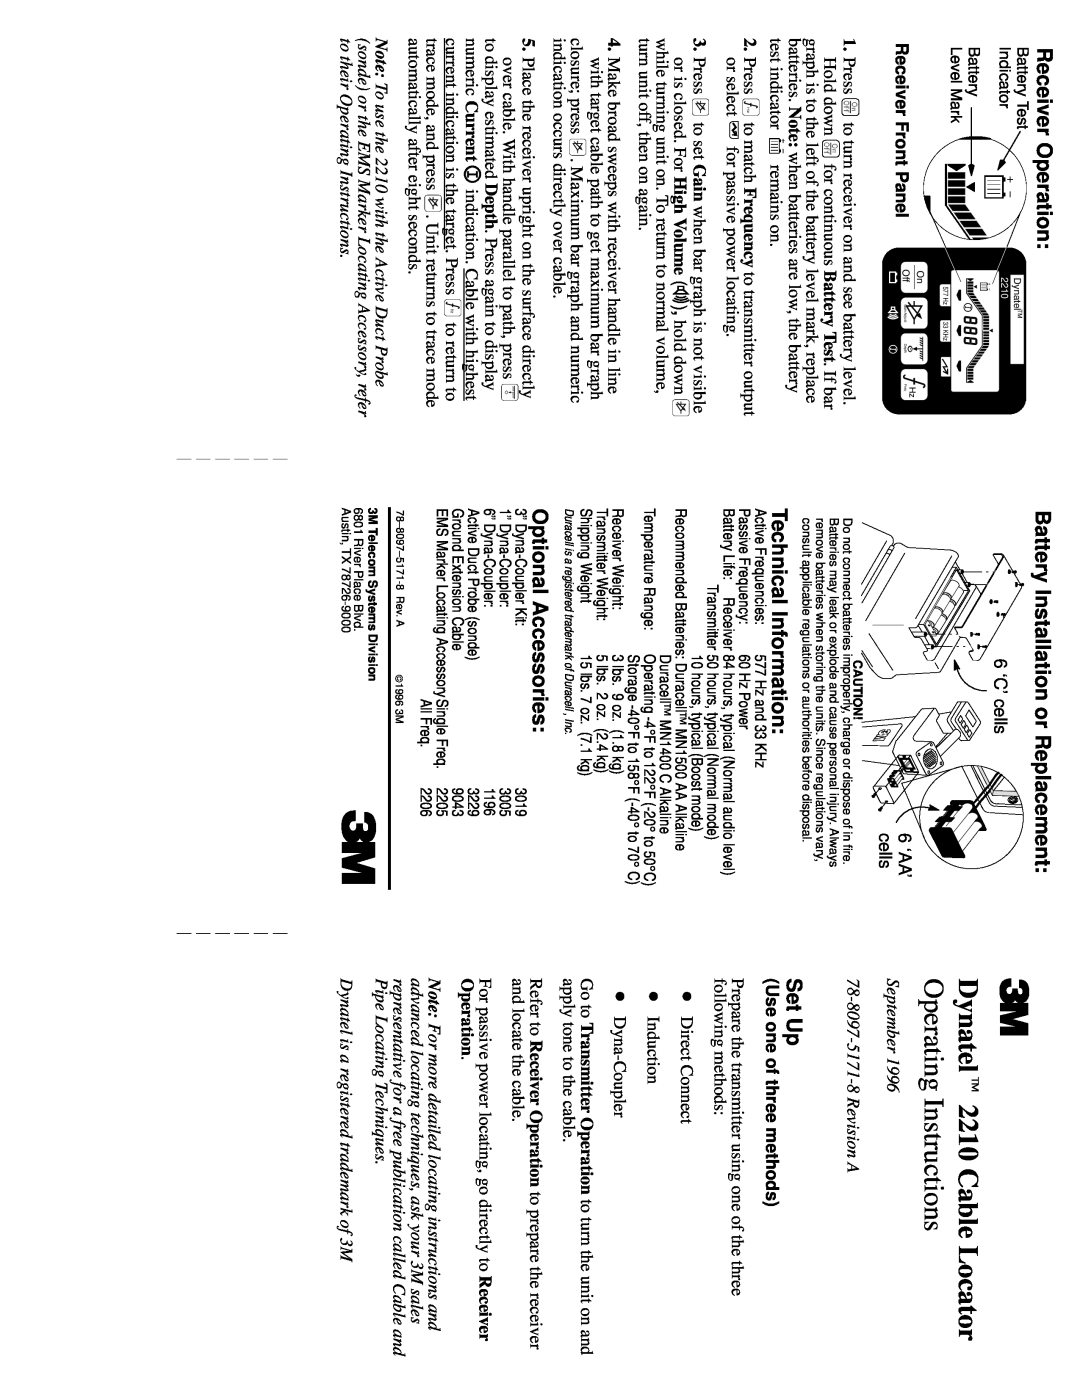 3M manual DynatelTM 2210 Cable Locator, Operators Manual, October 1996 78±8097±5171±8 Revision A 